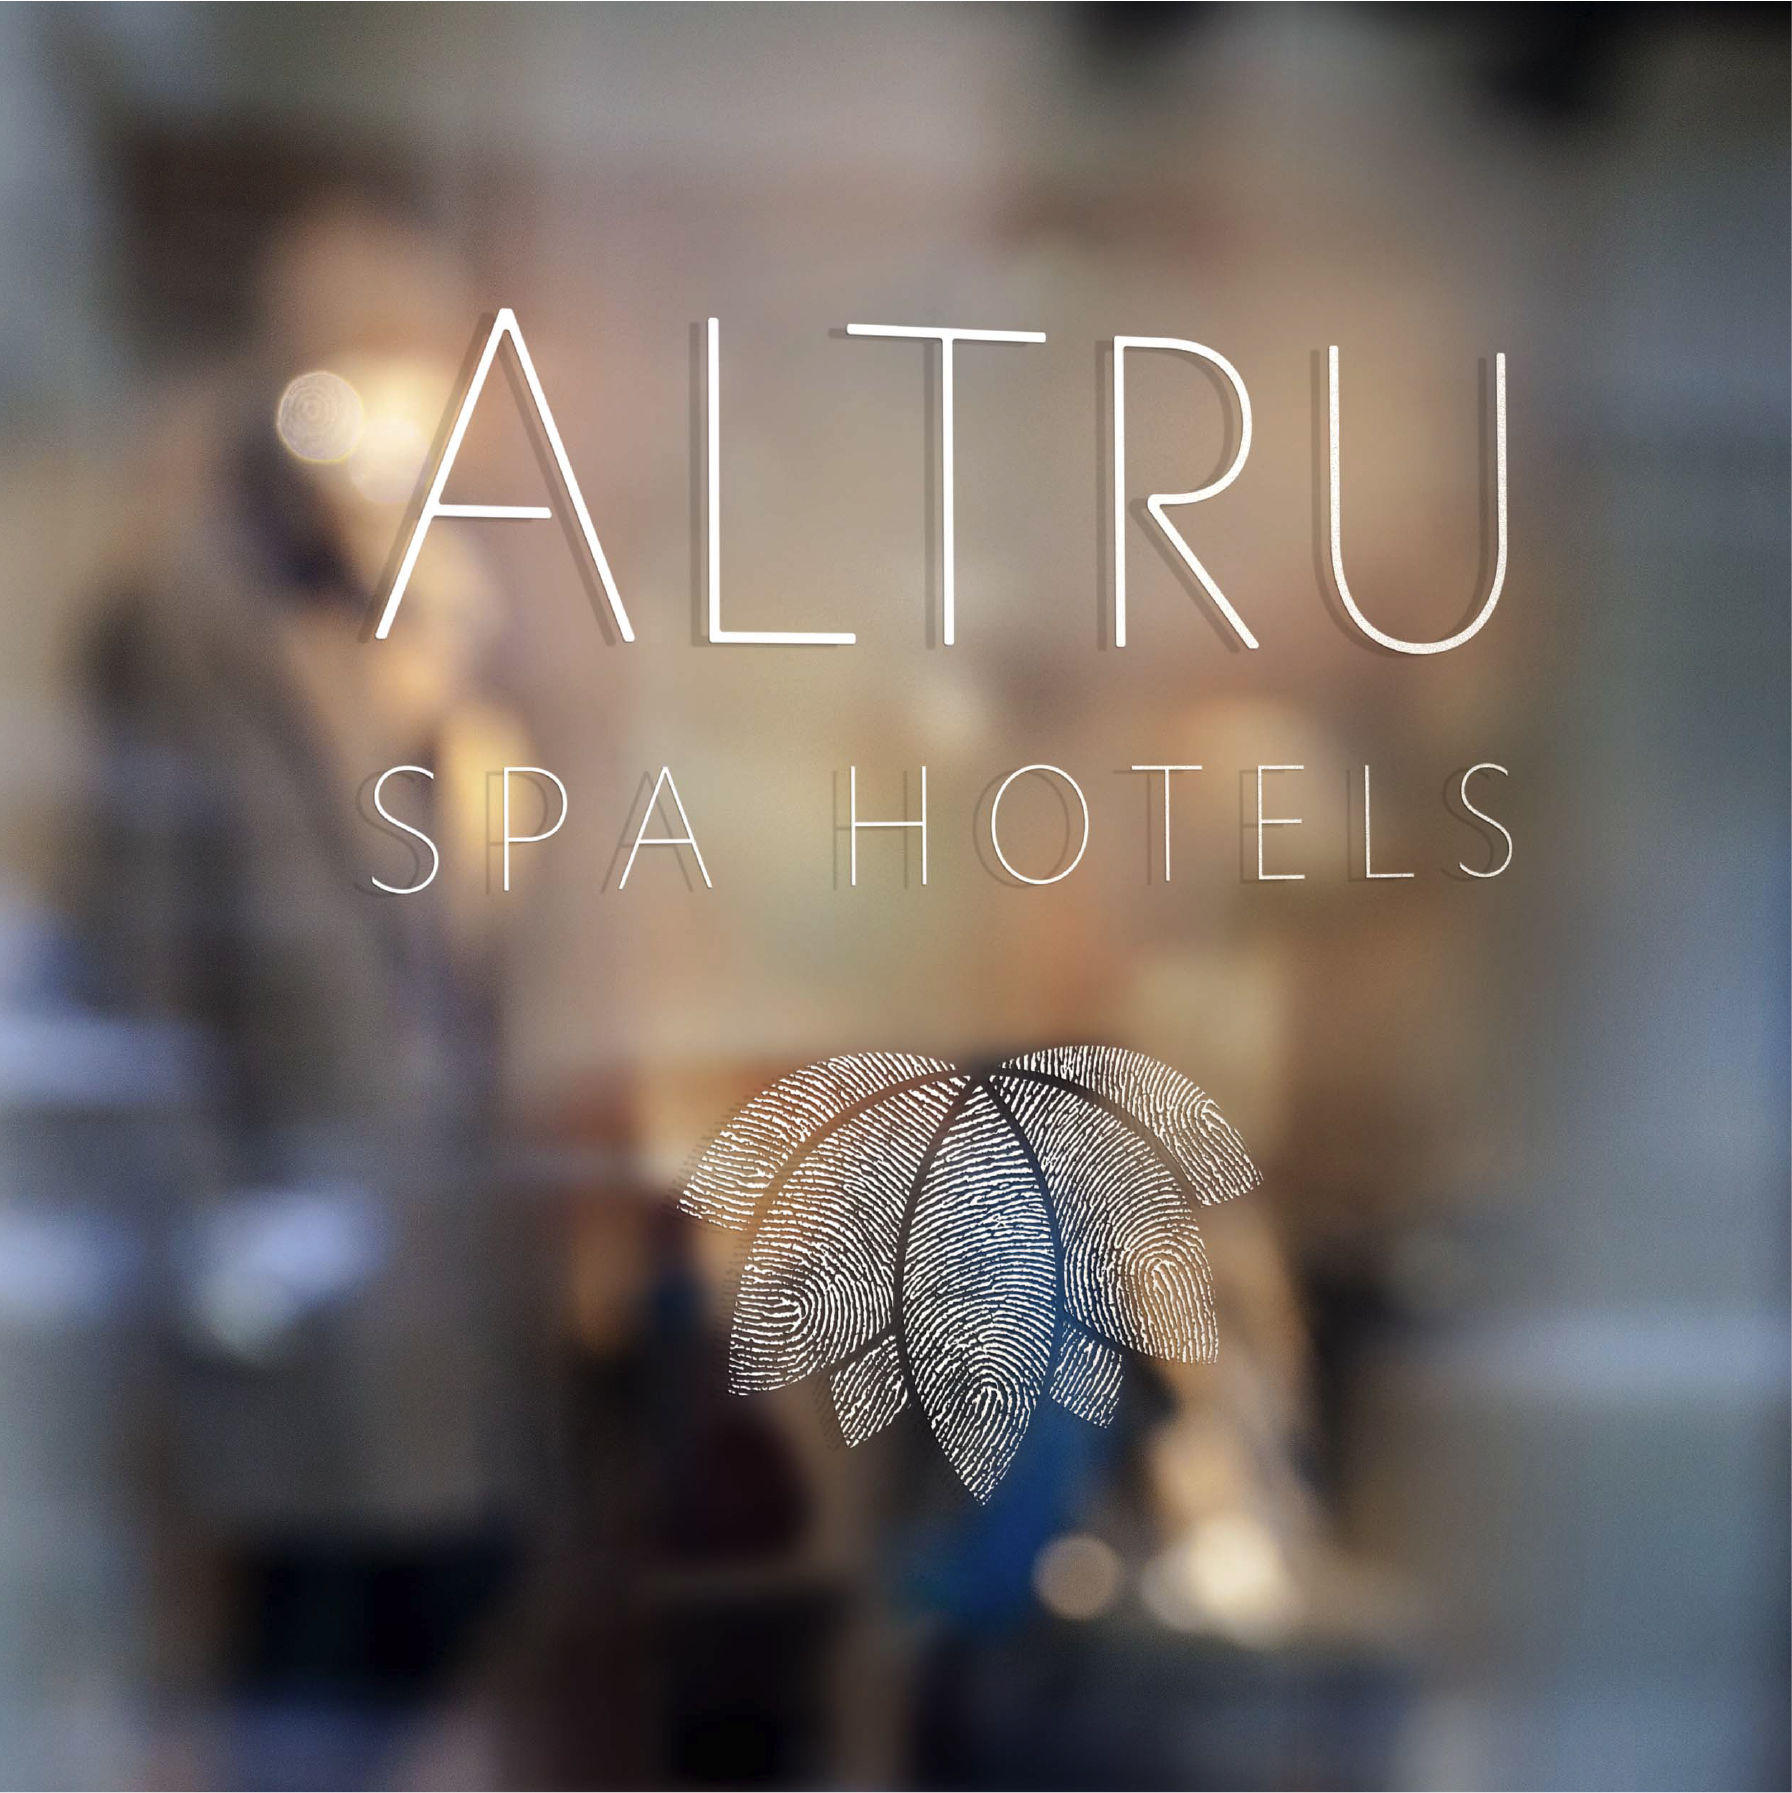 Image of Altru Spa logotype on window